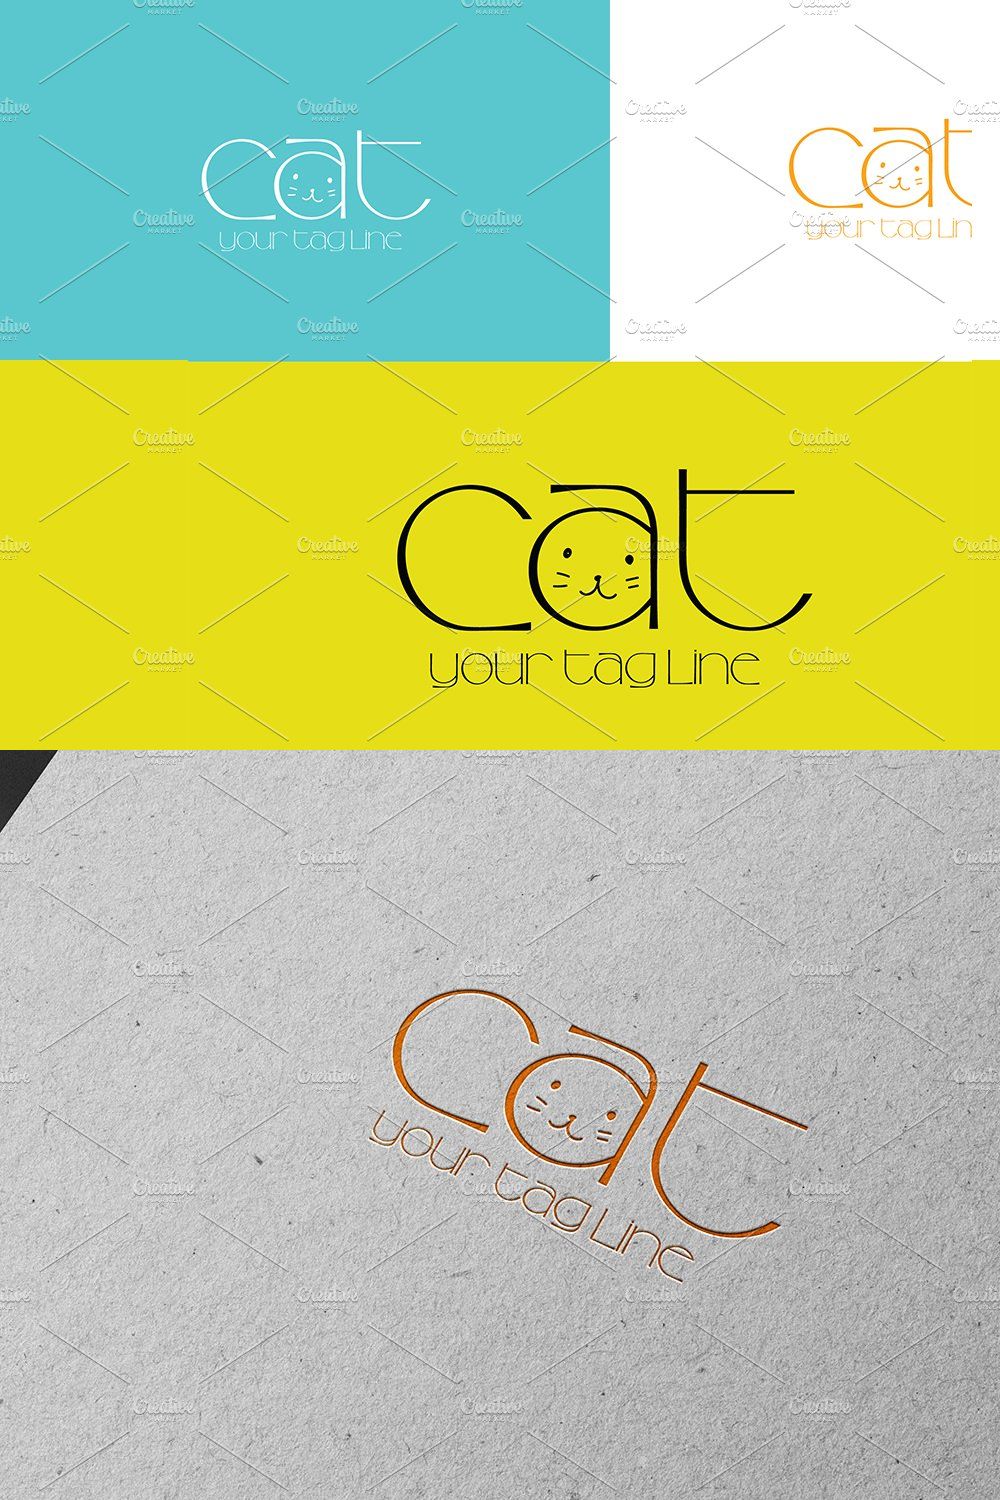 Minimal Cat logo pinterest preview image.